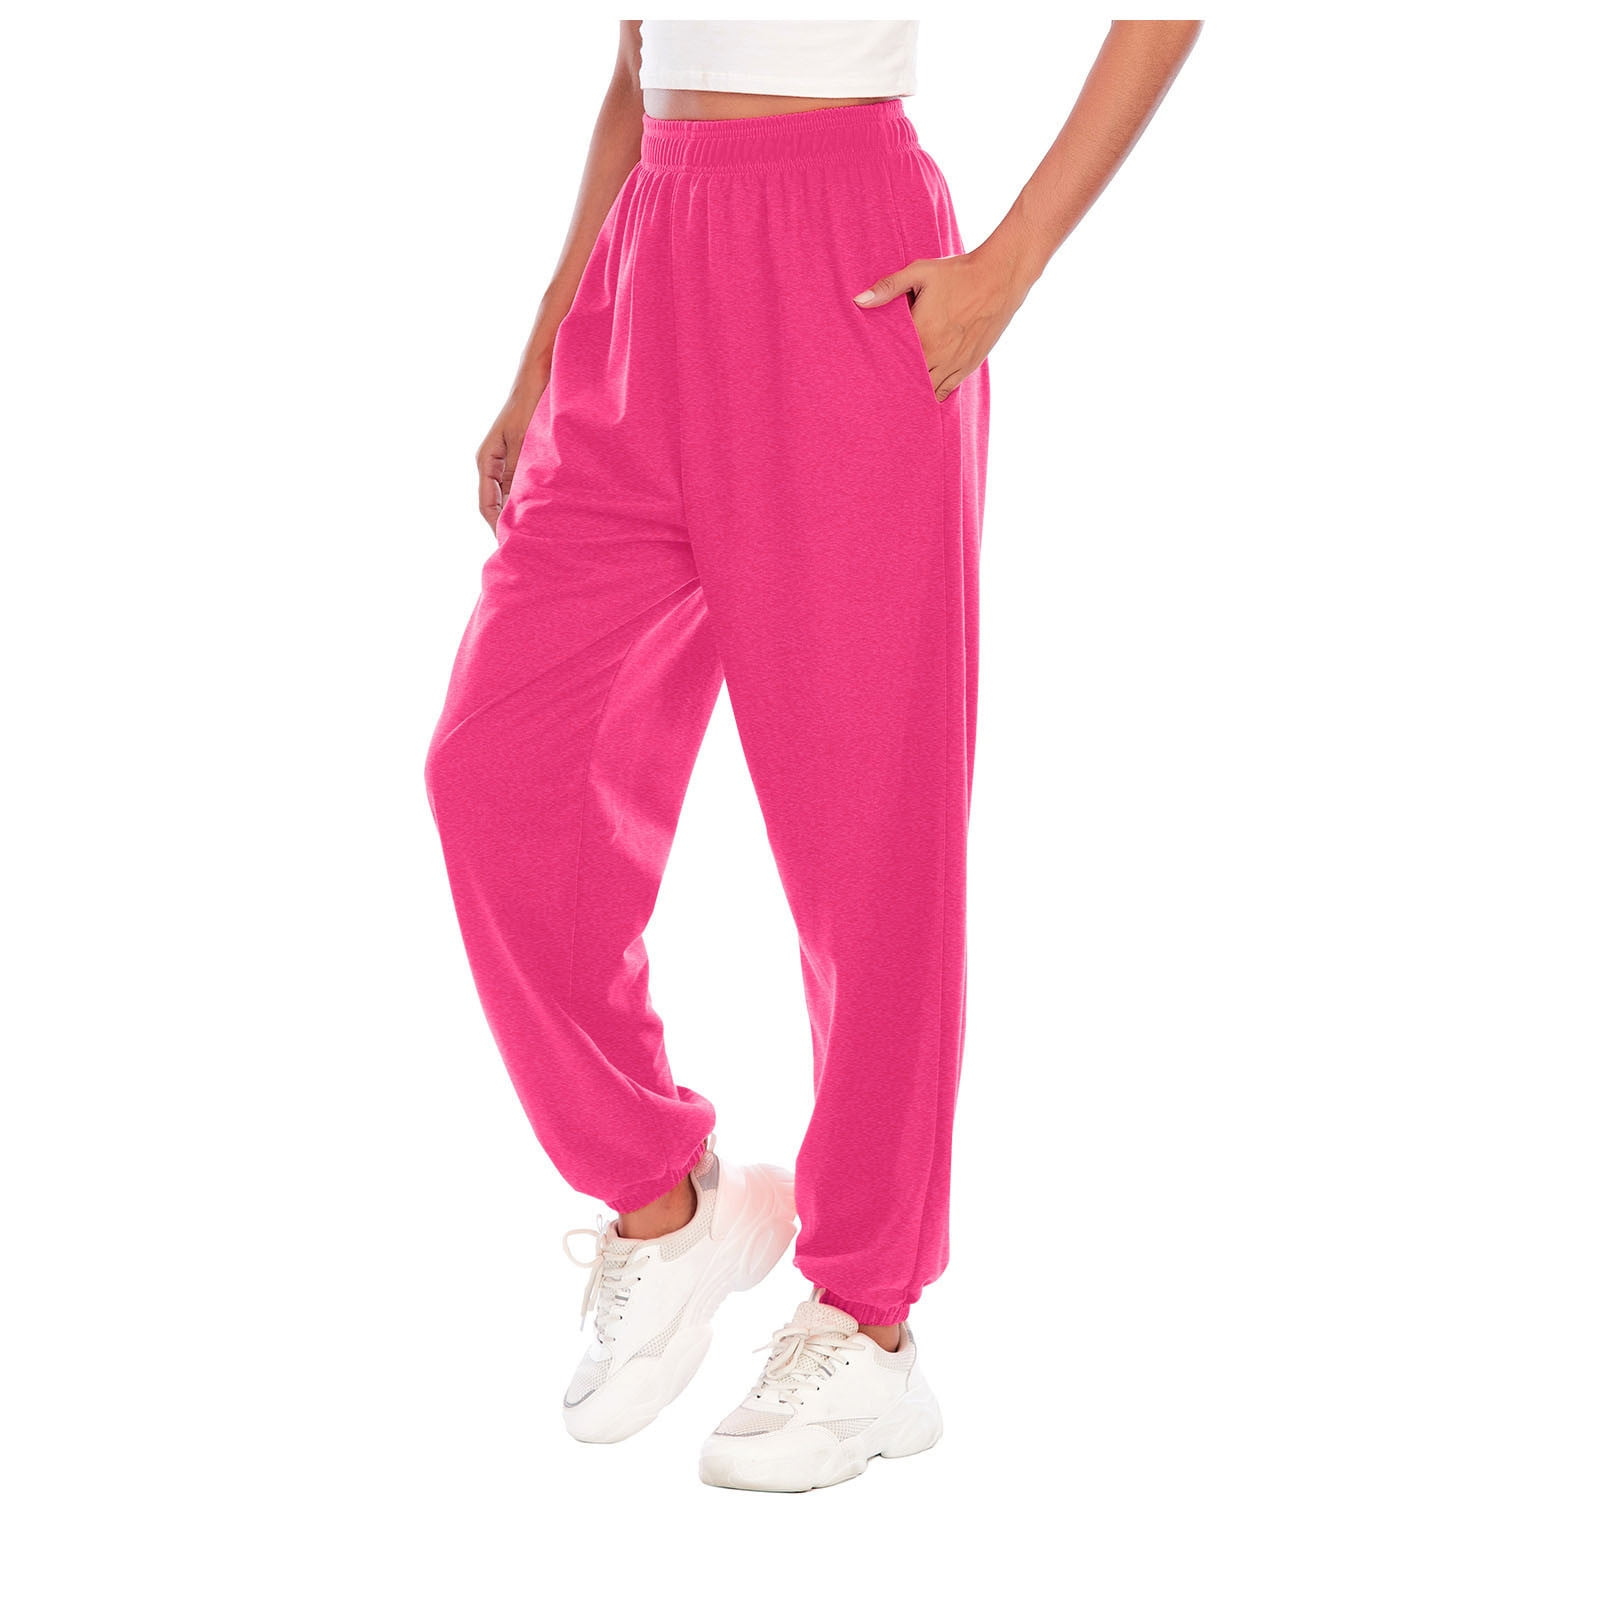 UHUYA Womens Baggy Sweatpants Sports Pants Trousers Jogging Sweatpants  Jogger Pants Hot Pink XXL US:12